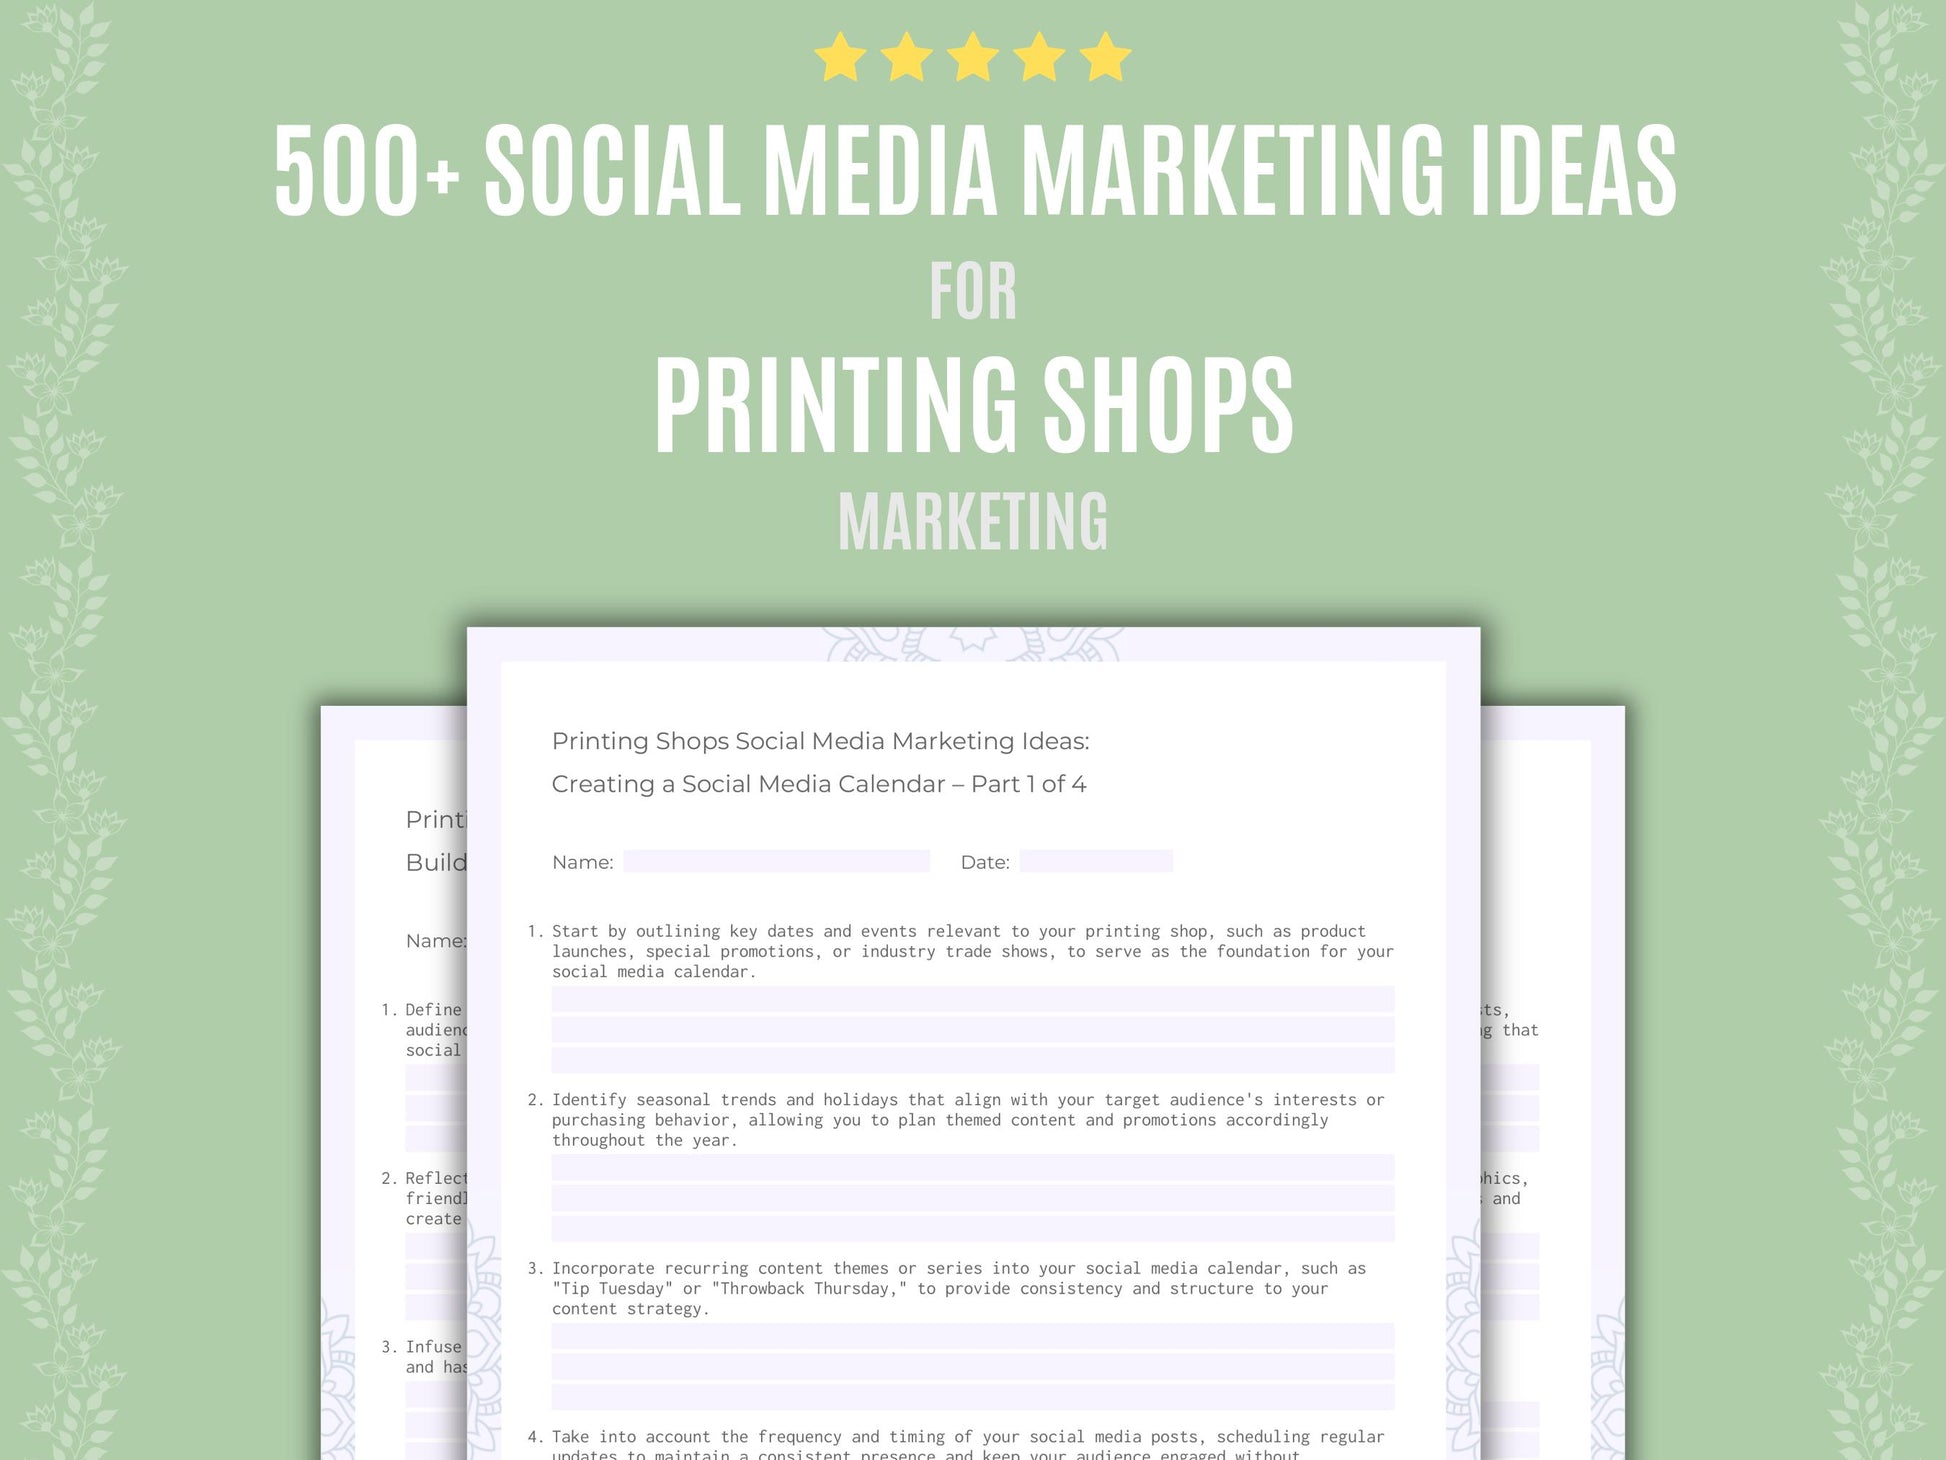 Printing Shops Social Media Marketing Ideas